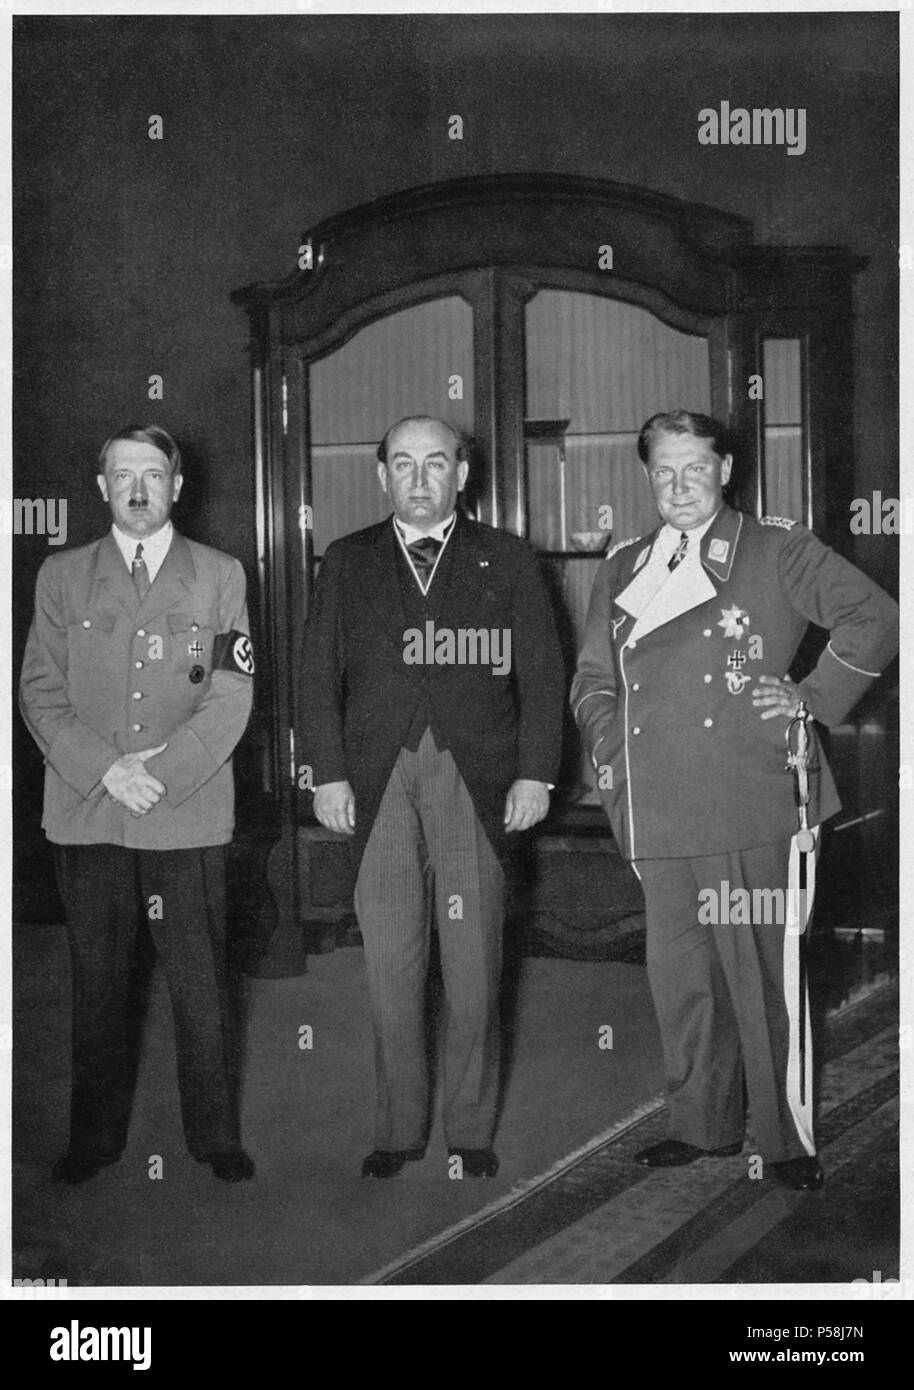 Adolf Hitler, Hungarian Prime Minister Gyula Gömbös and Hermann Goering at Reception, Full-Length Portrait, Berlin, Germany, 1935 Stock Photo